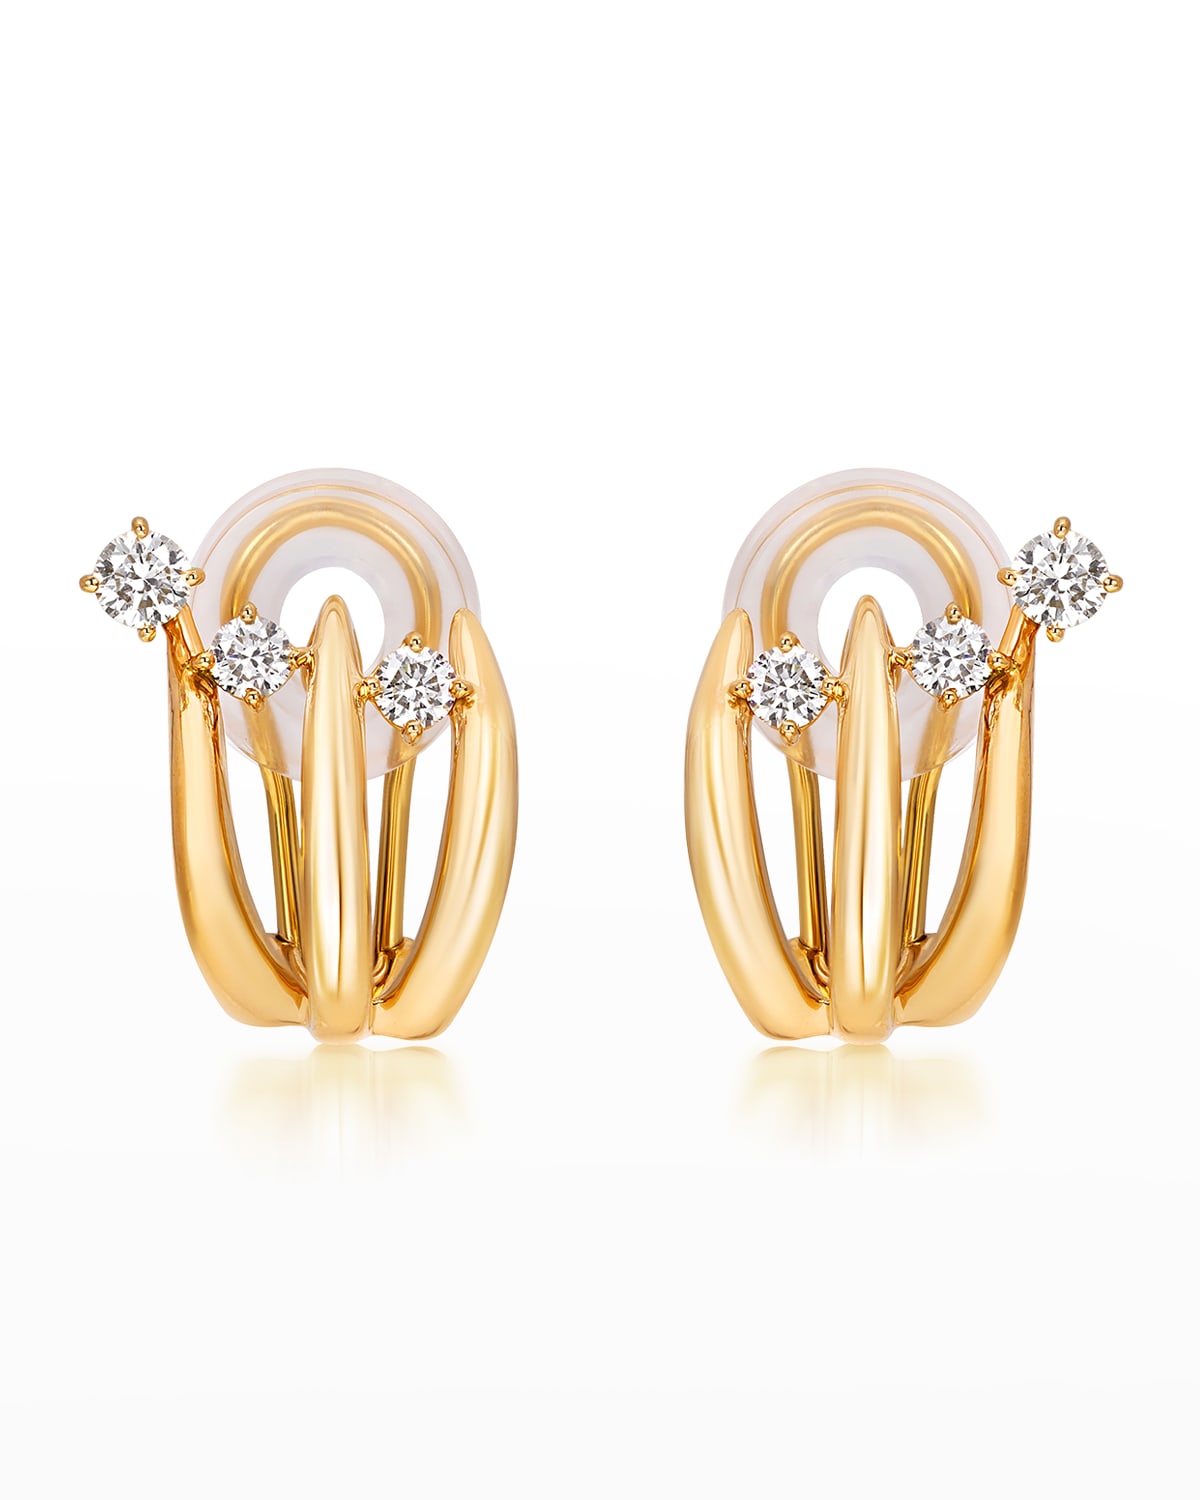 Hueb 18k Tribal Yellow Gold Earrings With Vs-gh Diamonds, 0.51tcw